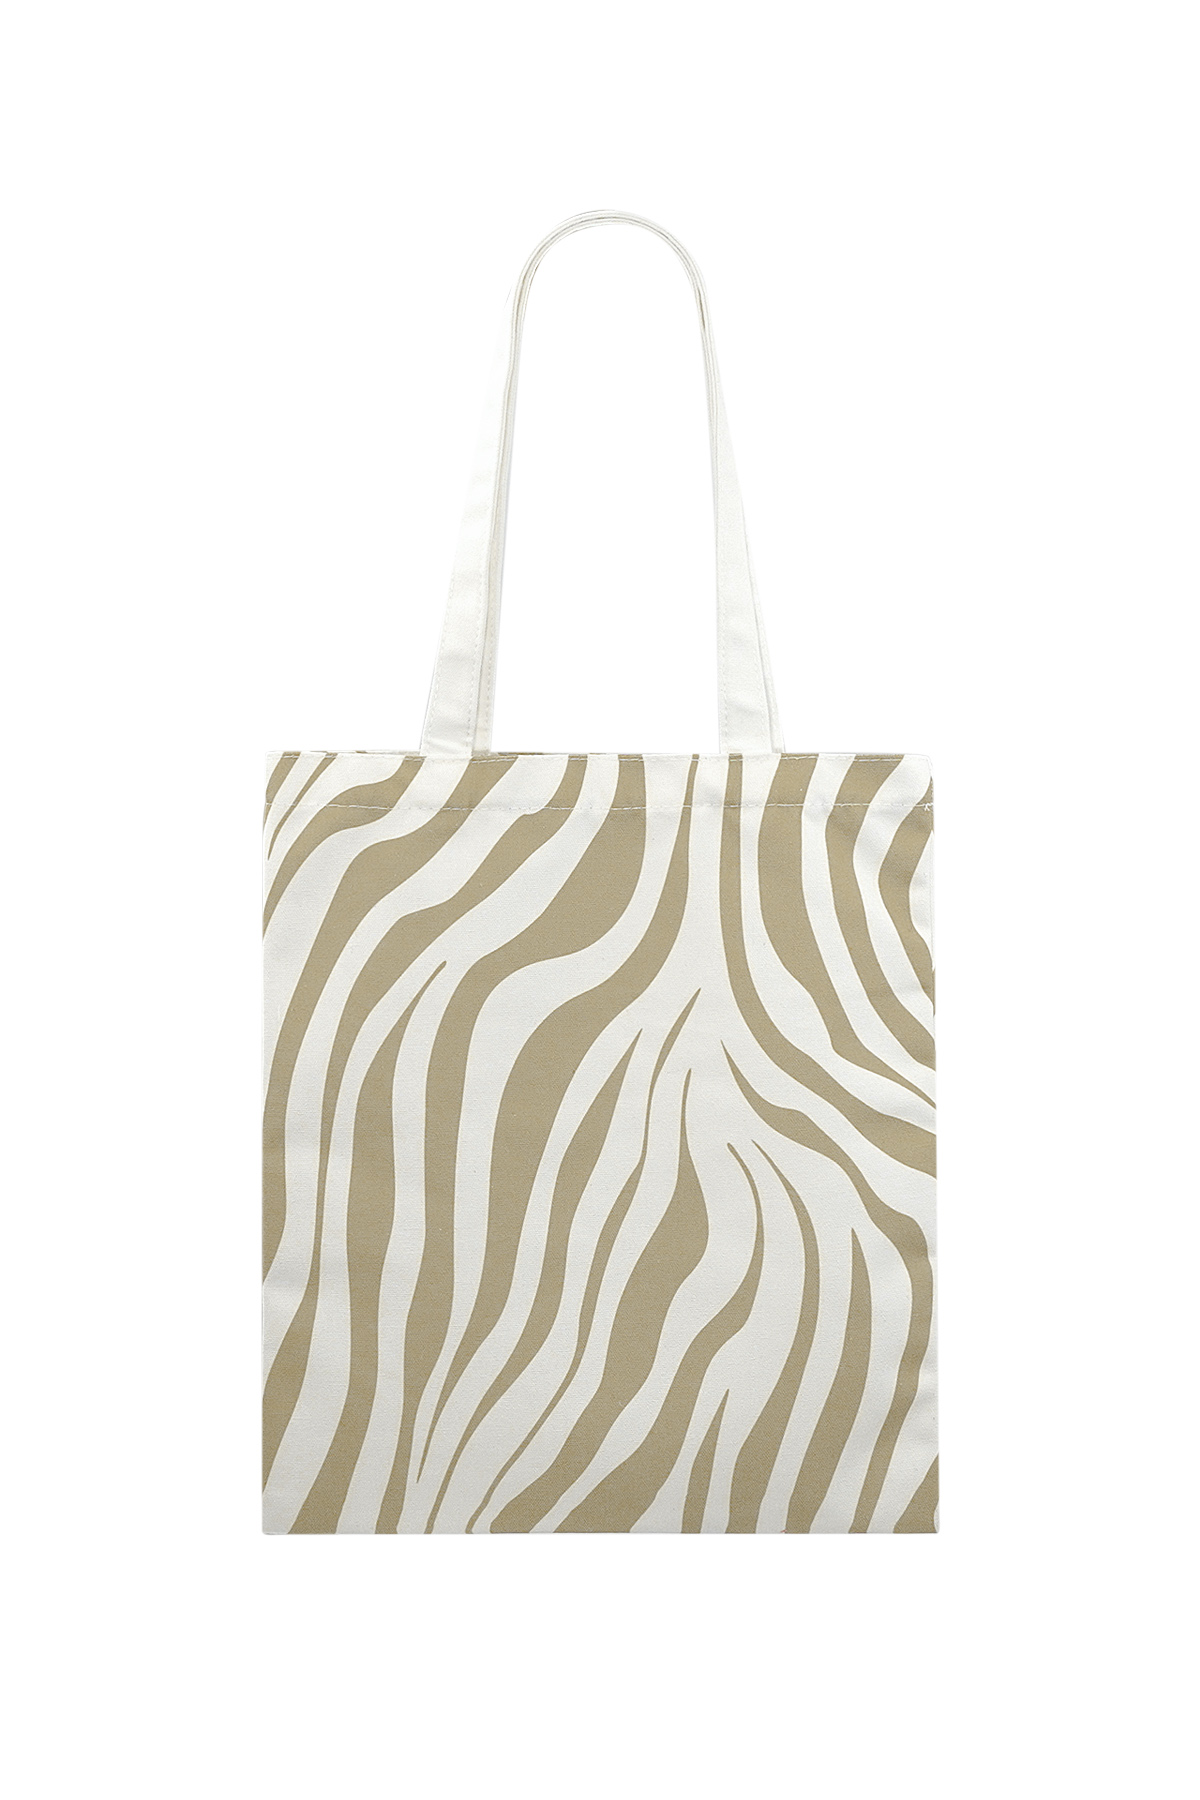 Kanvas shopper zebra desenli - bej 